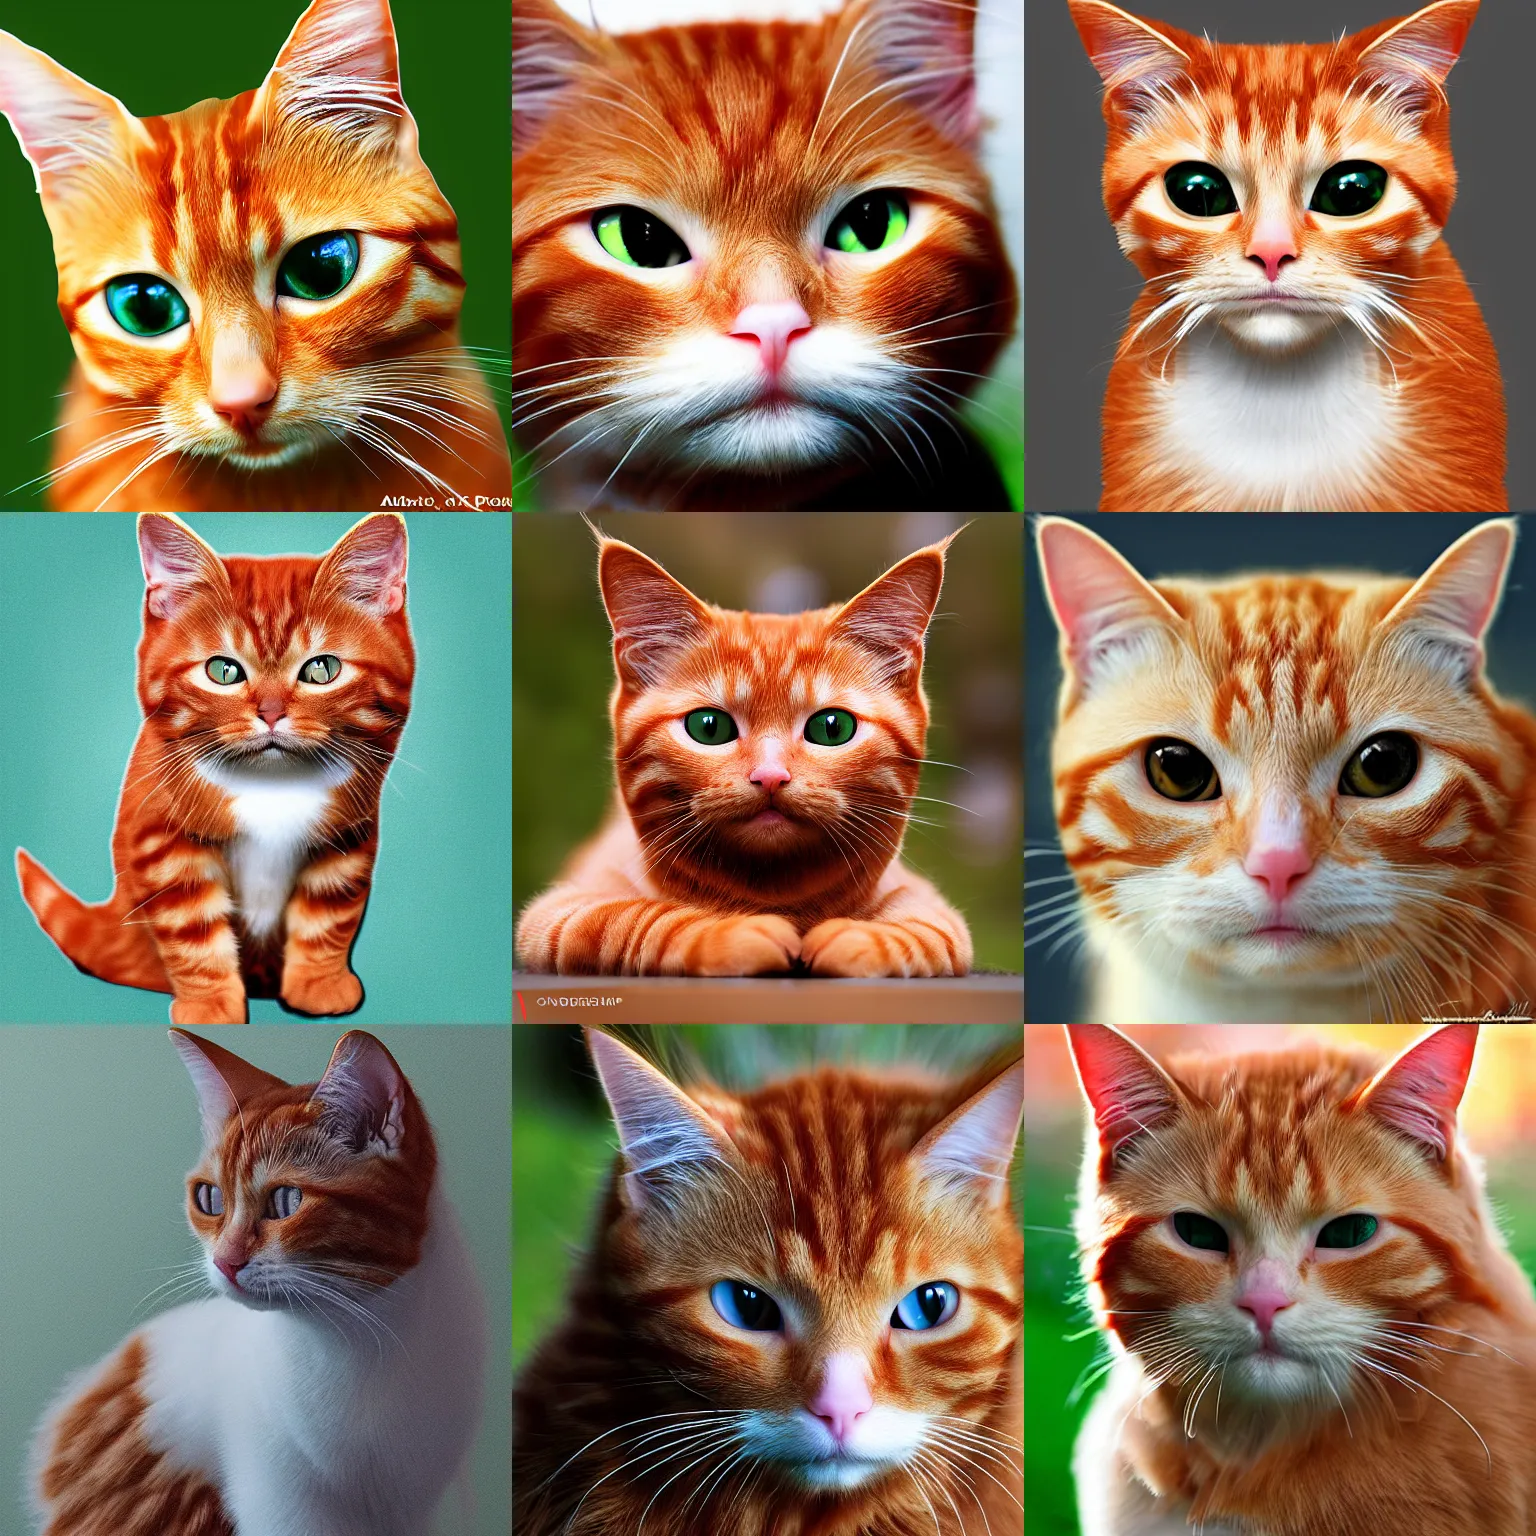 Prompt: ginger cat, Adobe Photoshop